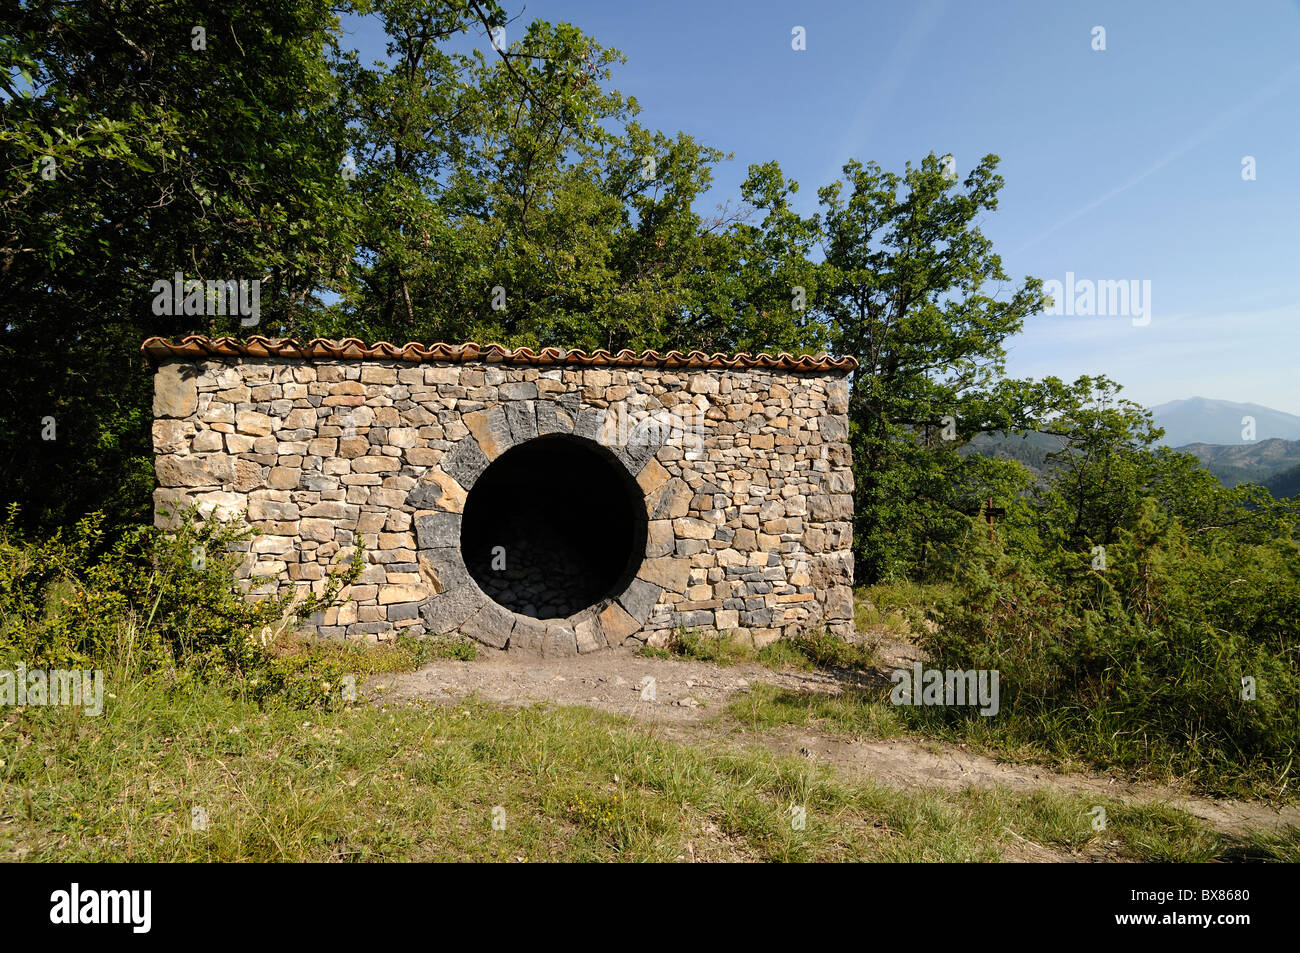 Andy Goldsworthy Land Art Sculpture, Dry Stone Hut or Refuge d'Art, near Digne or Digne-les-Bains, Alpes-de-Haute-Provence, Provence, France Stock Photo